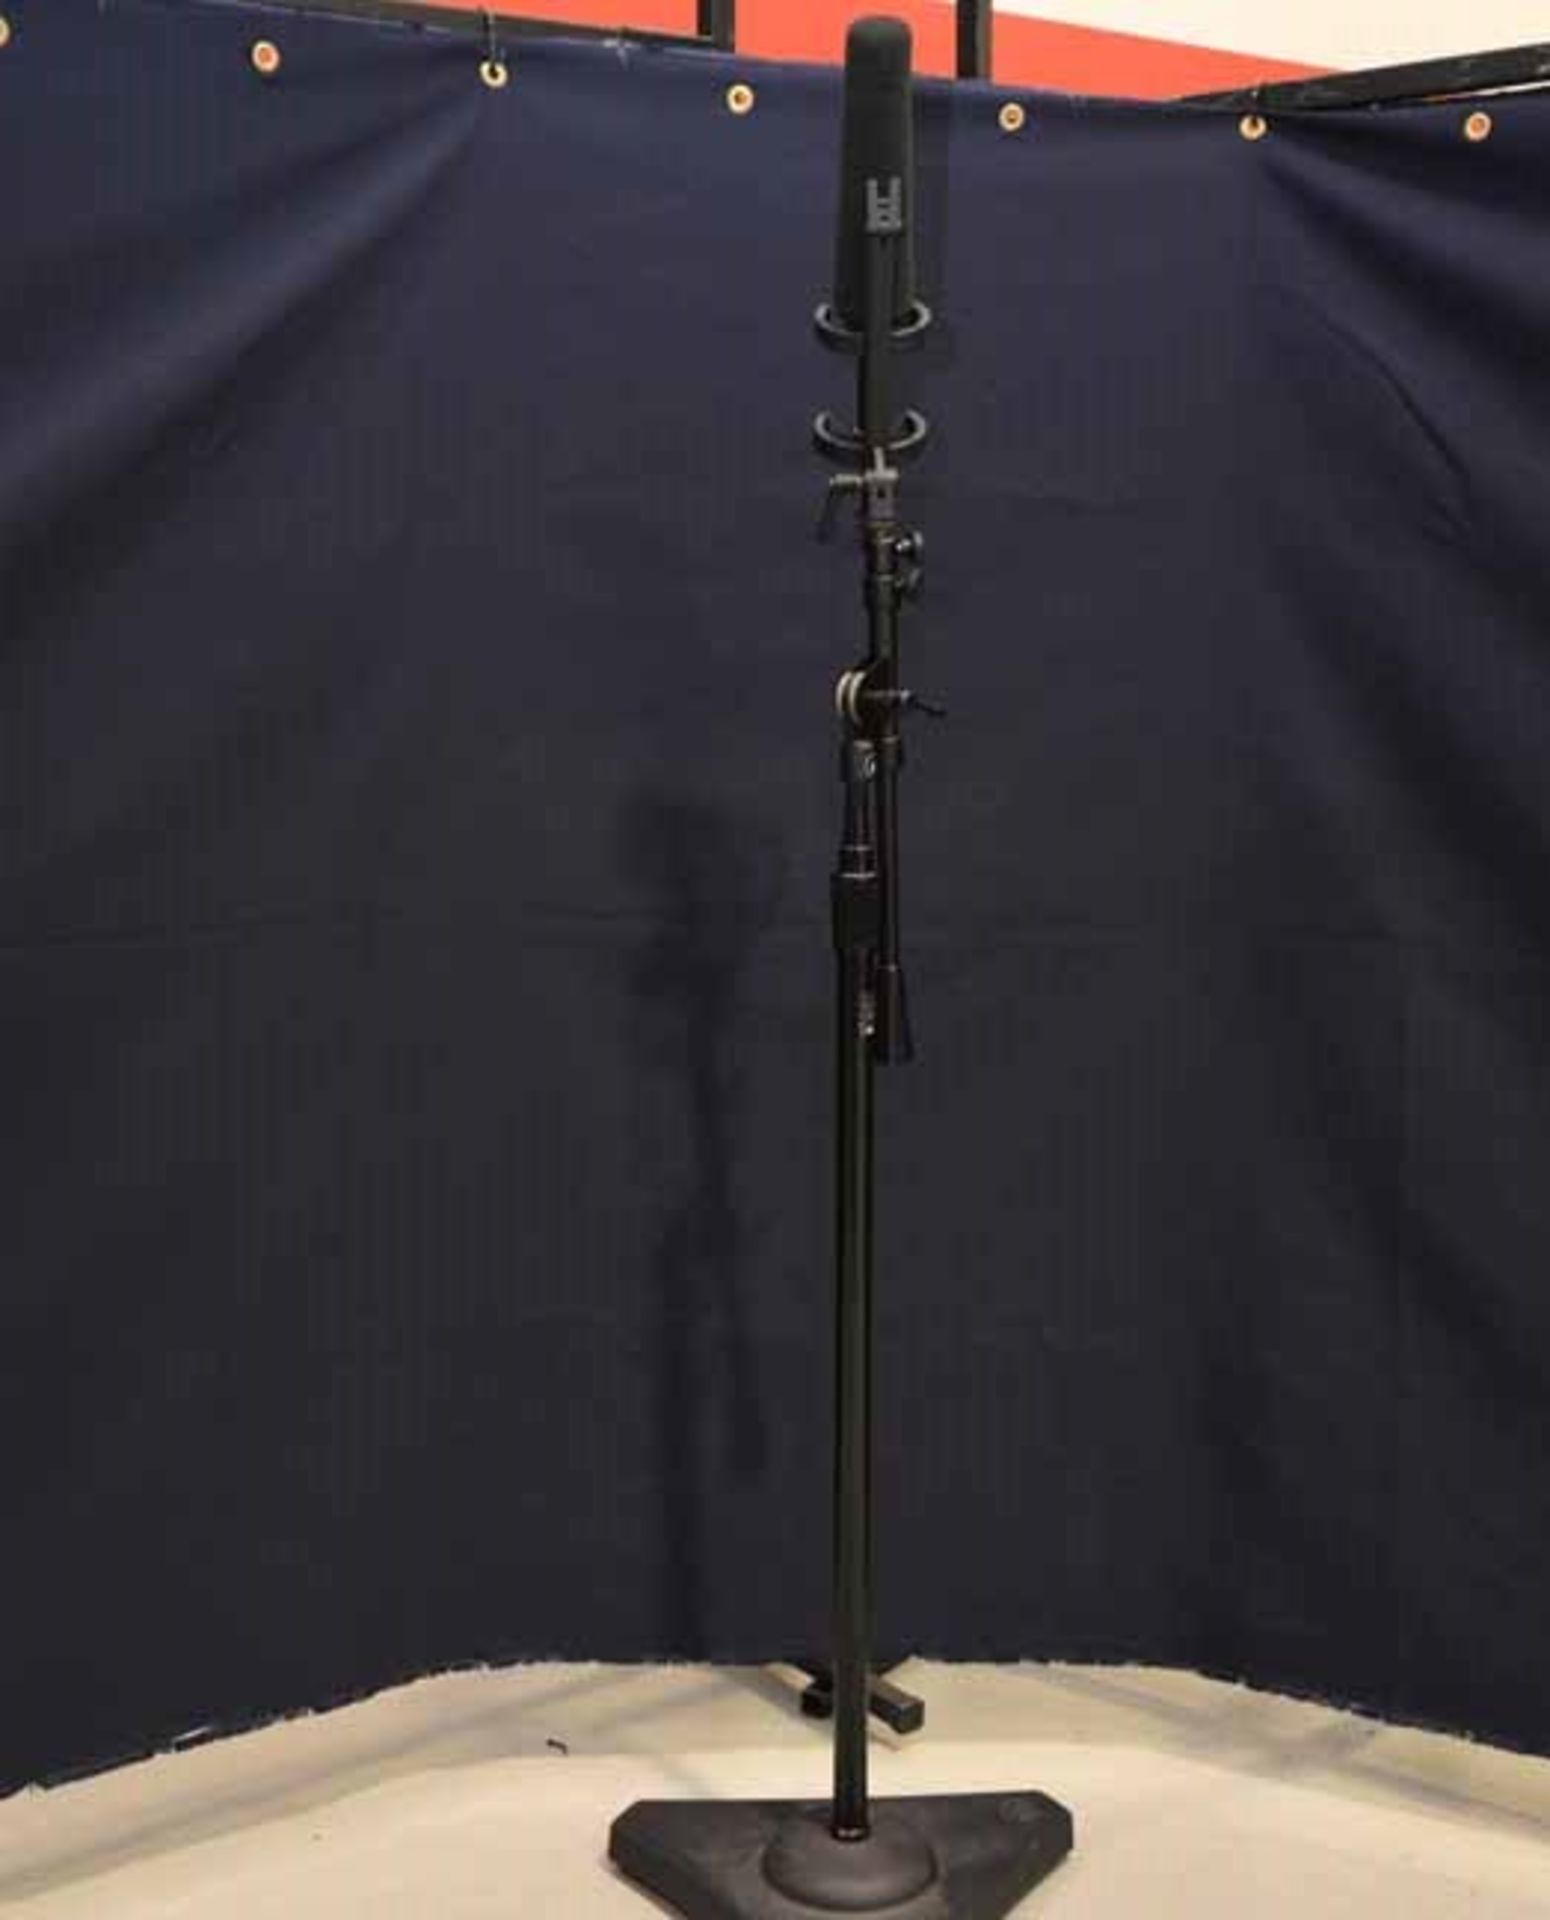 1 - Sennheiser MKH416P48 microphone on a Atlas Sound MS25 pro mic stand (black) - Image 2 of 2